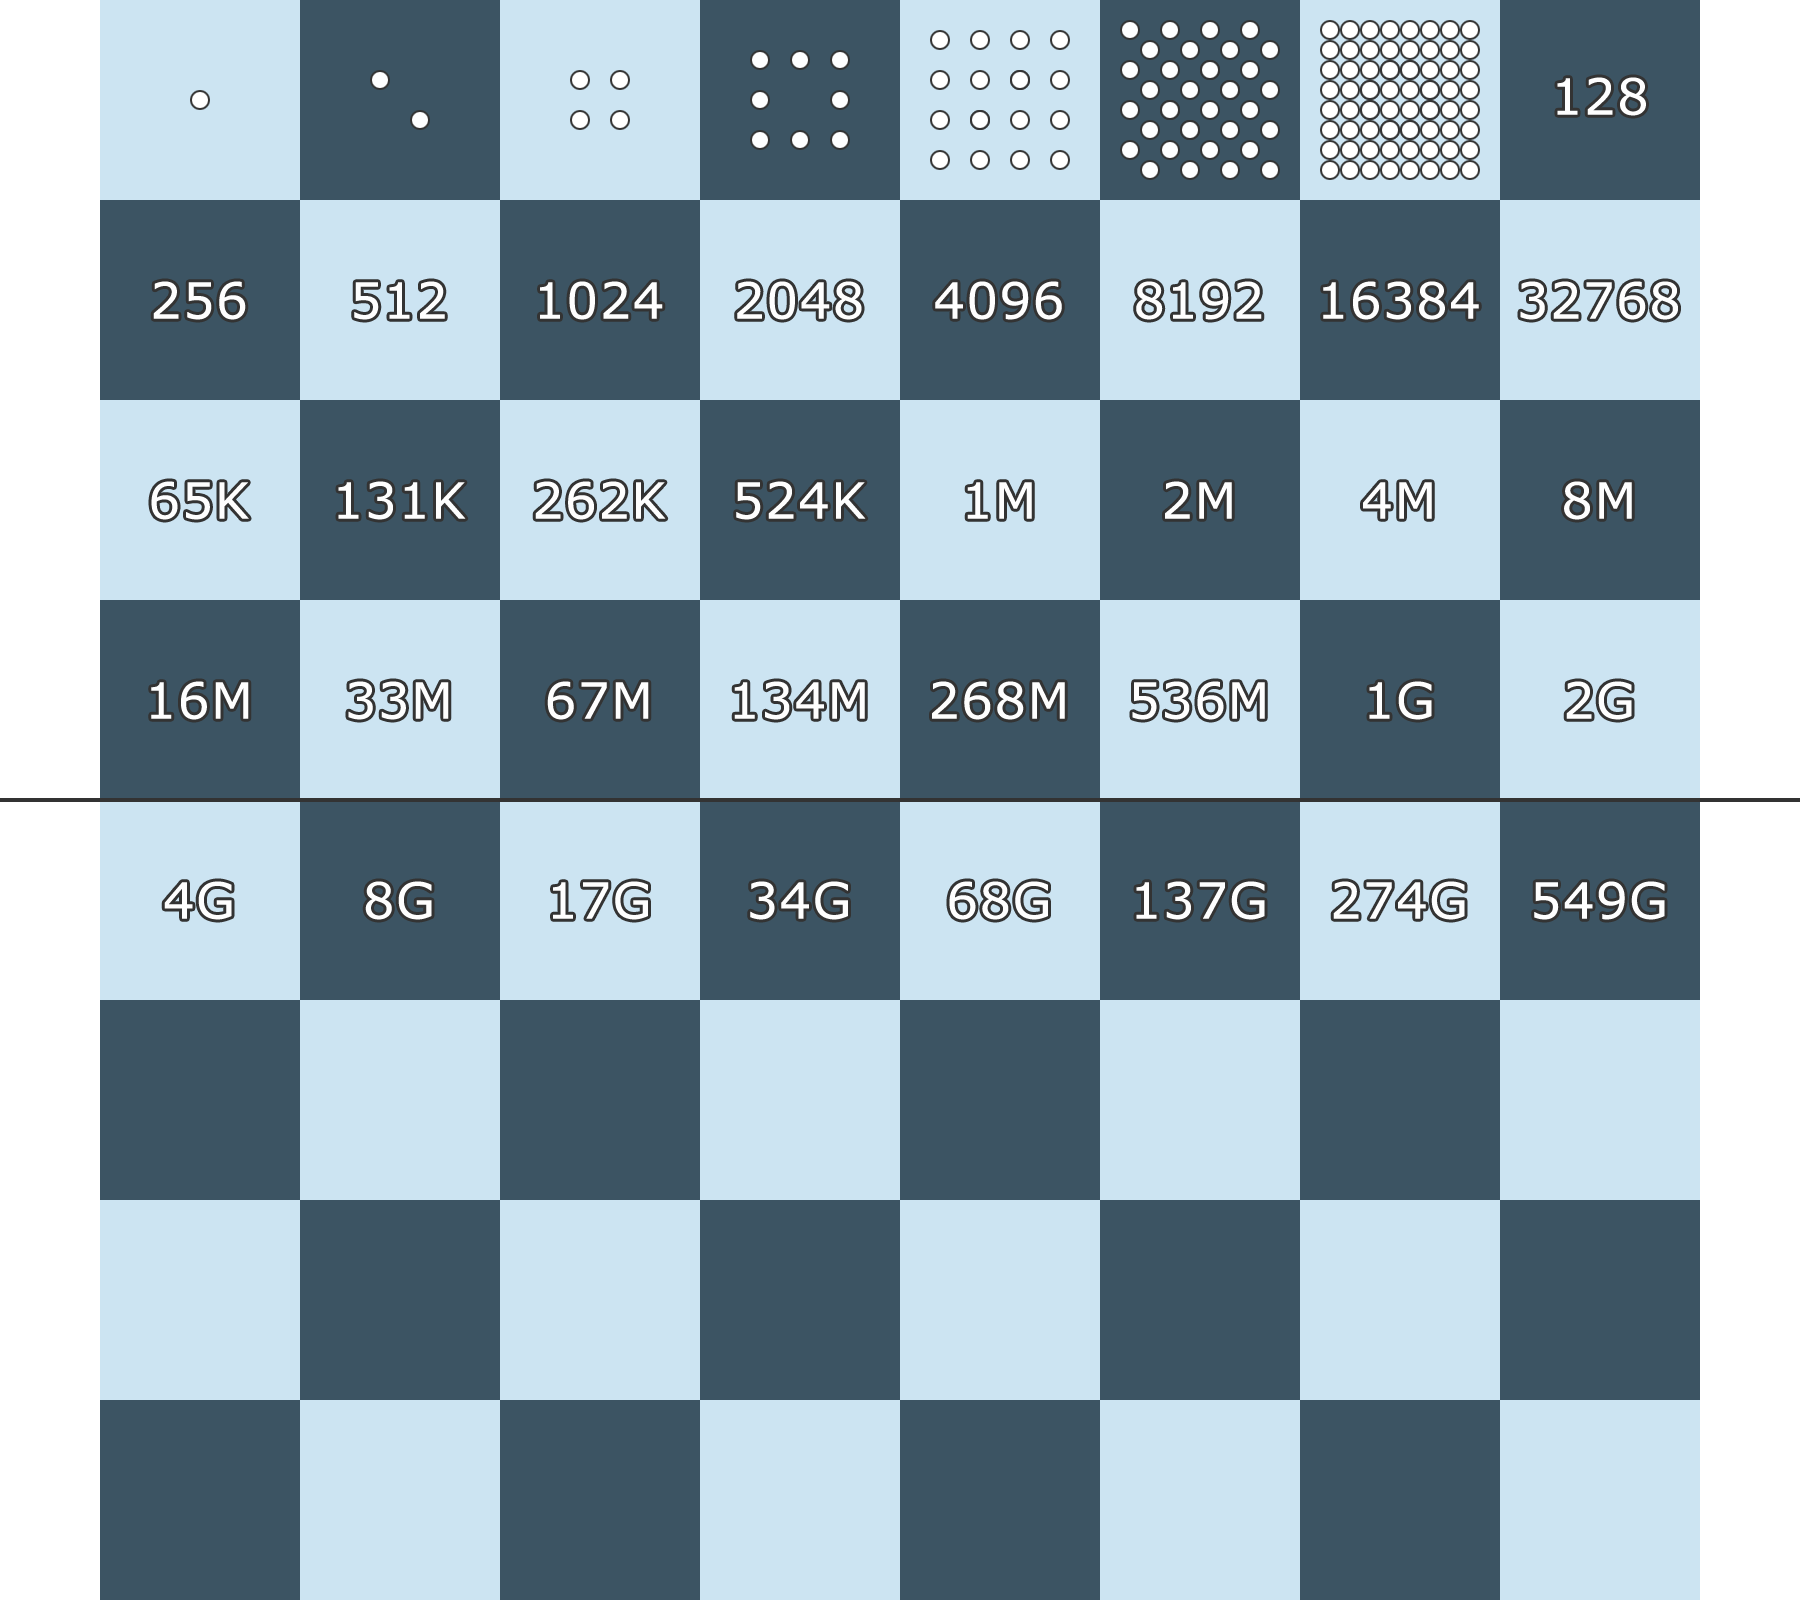 Chessboard - Wikipedia